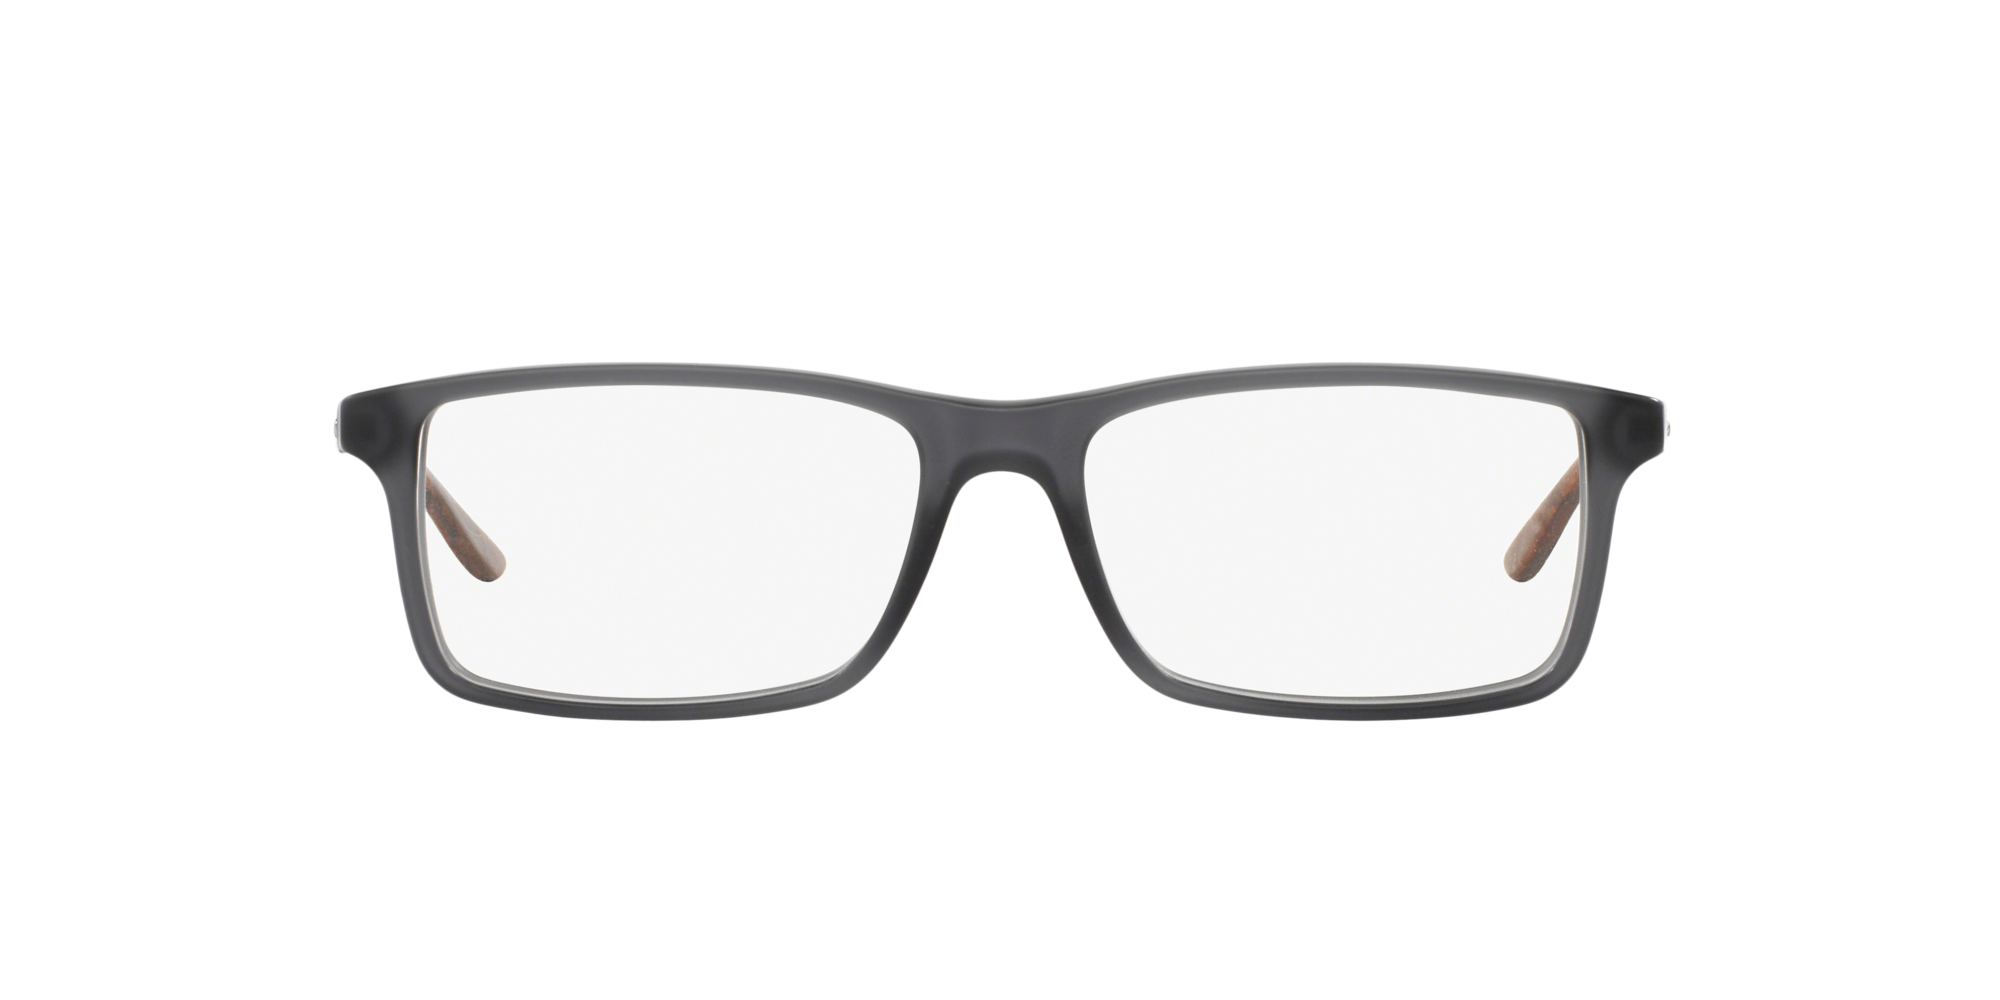 rl6128 eyeglasses